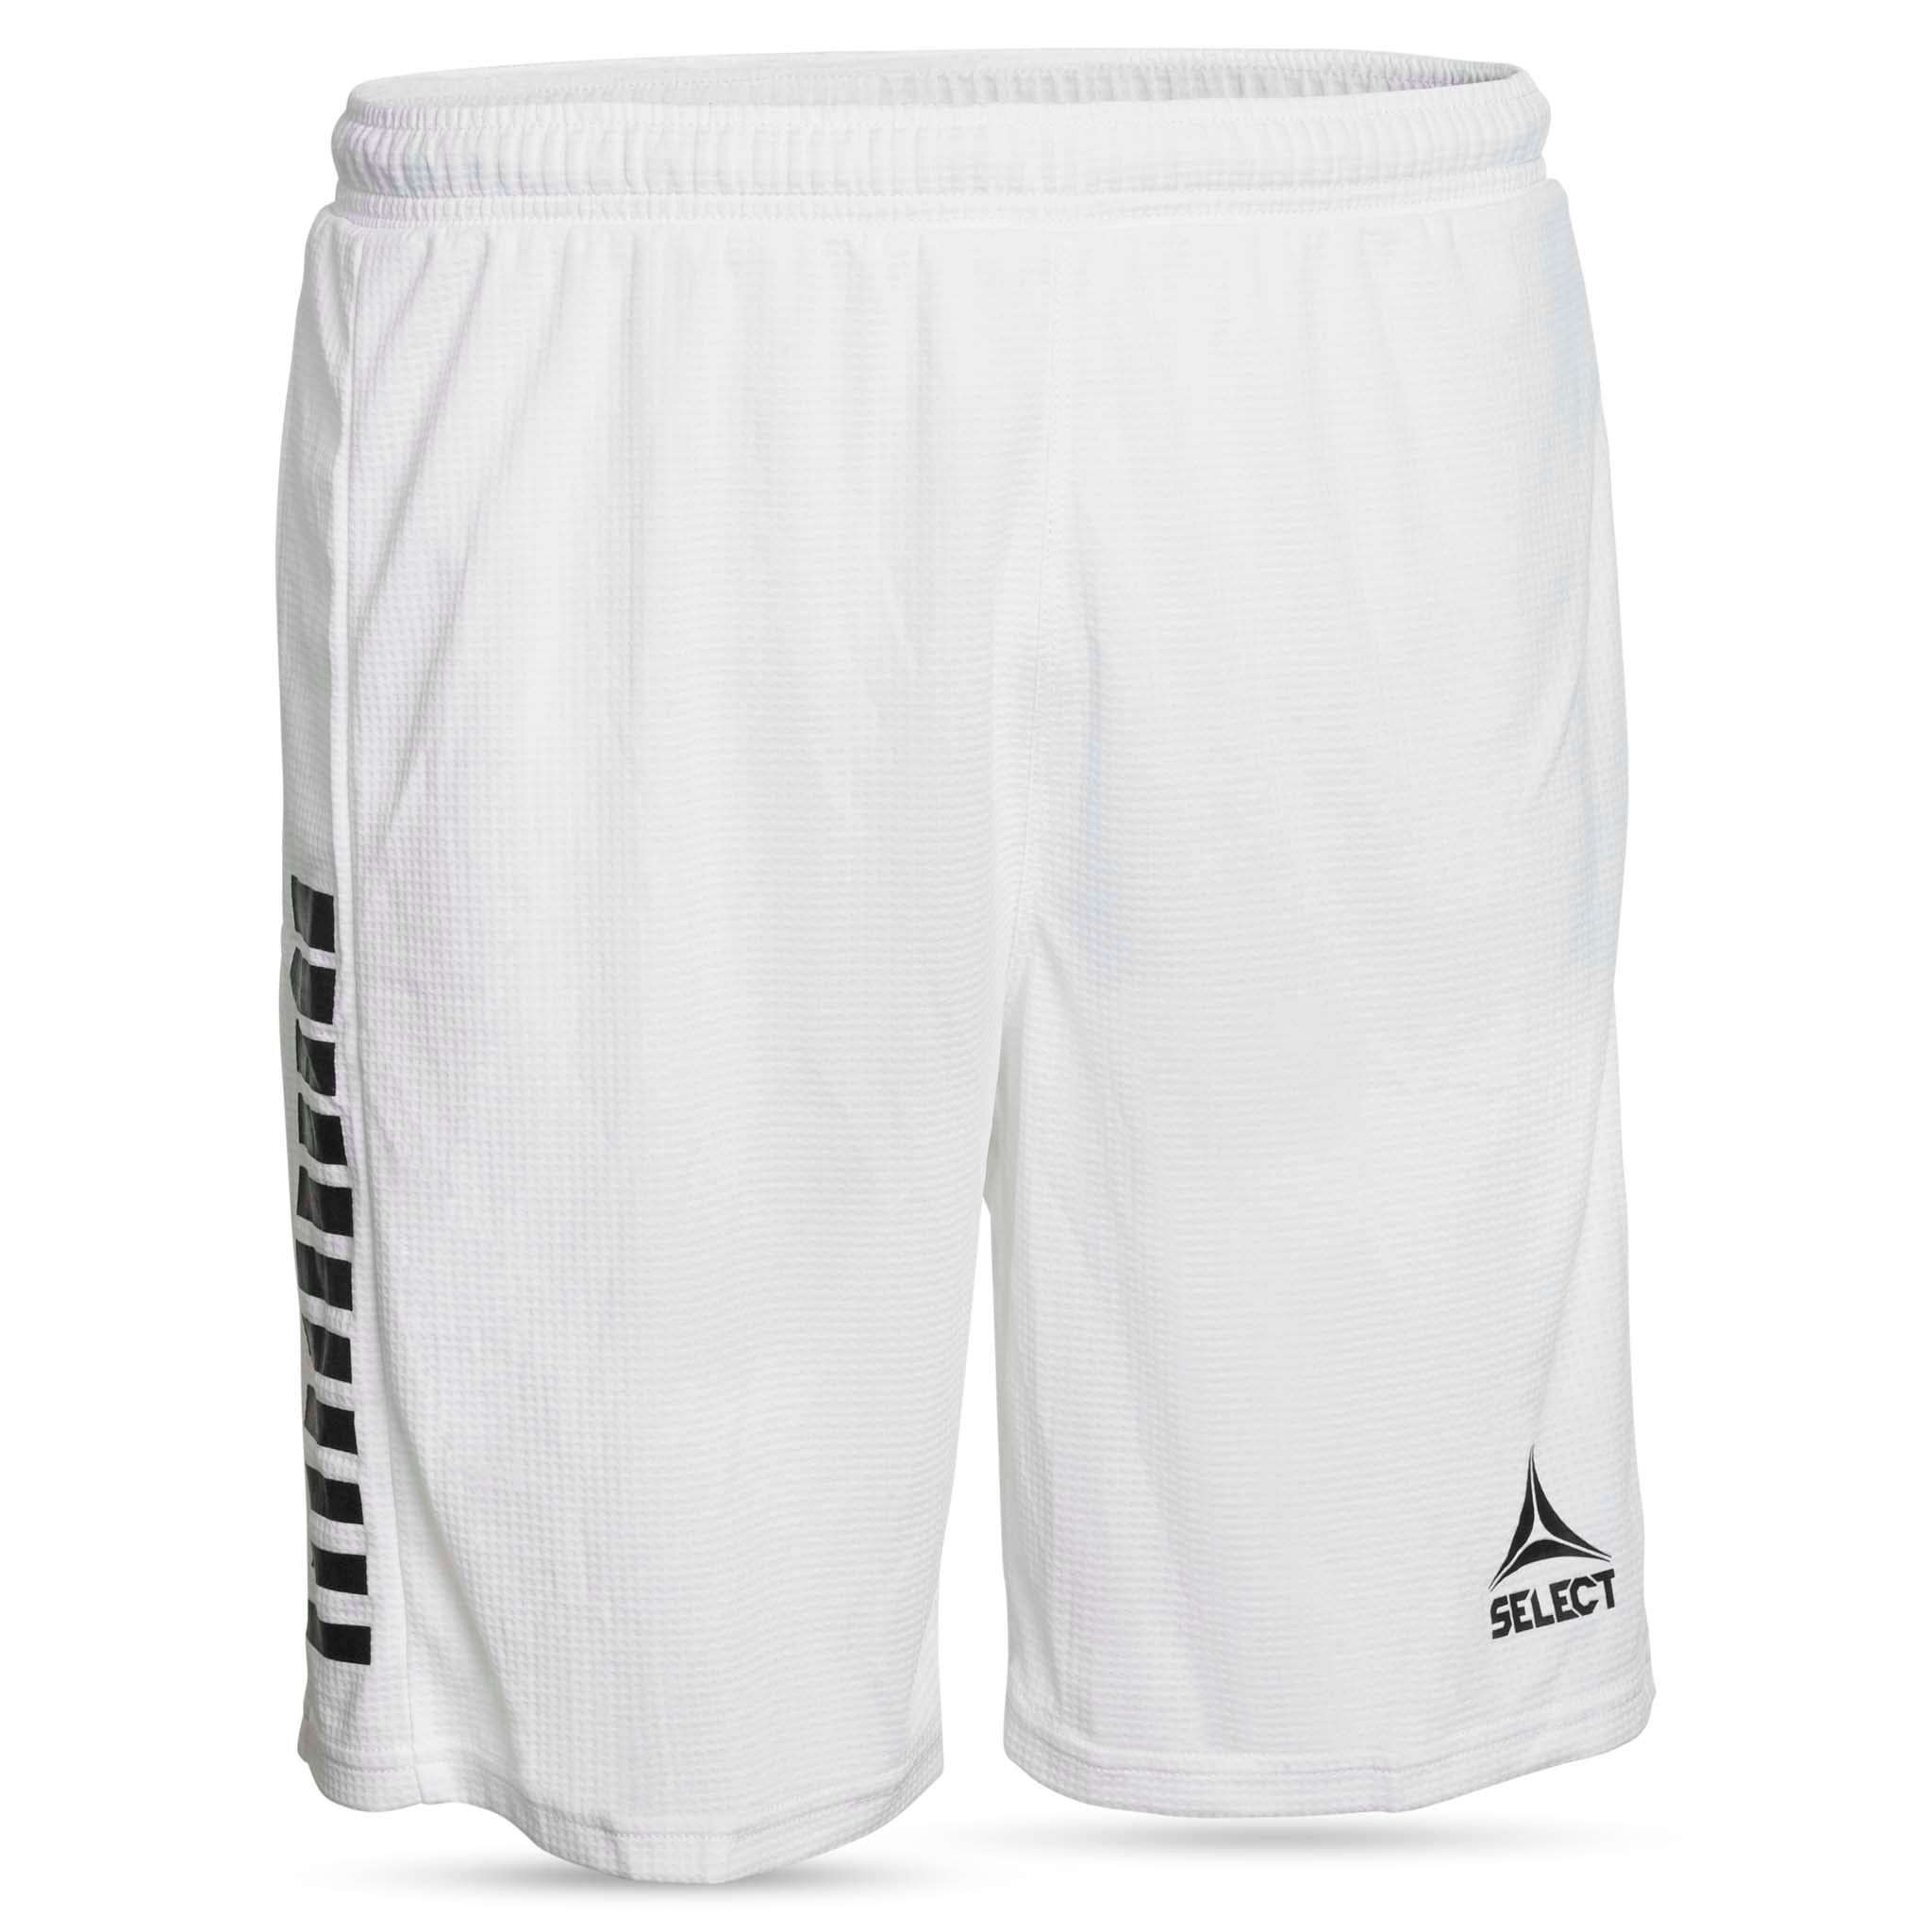 Player shorts - Monaco, youth #colour_white/black